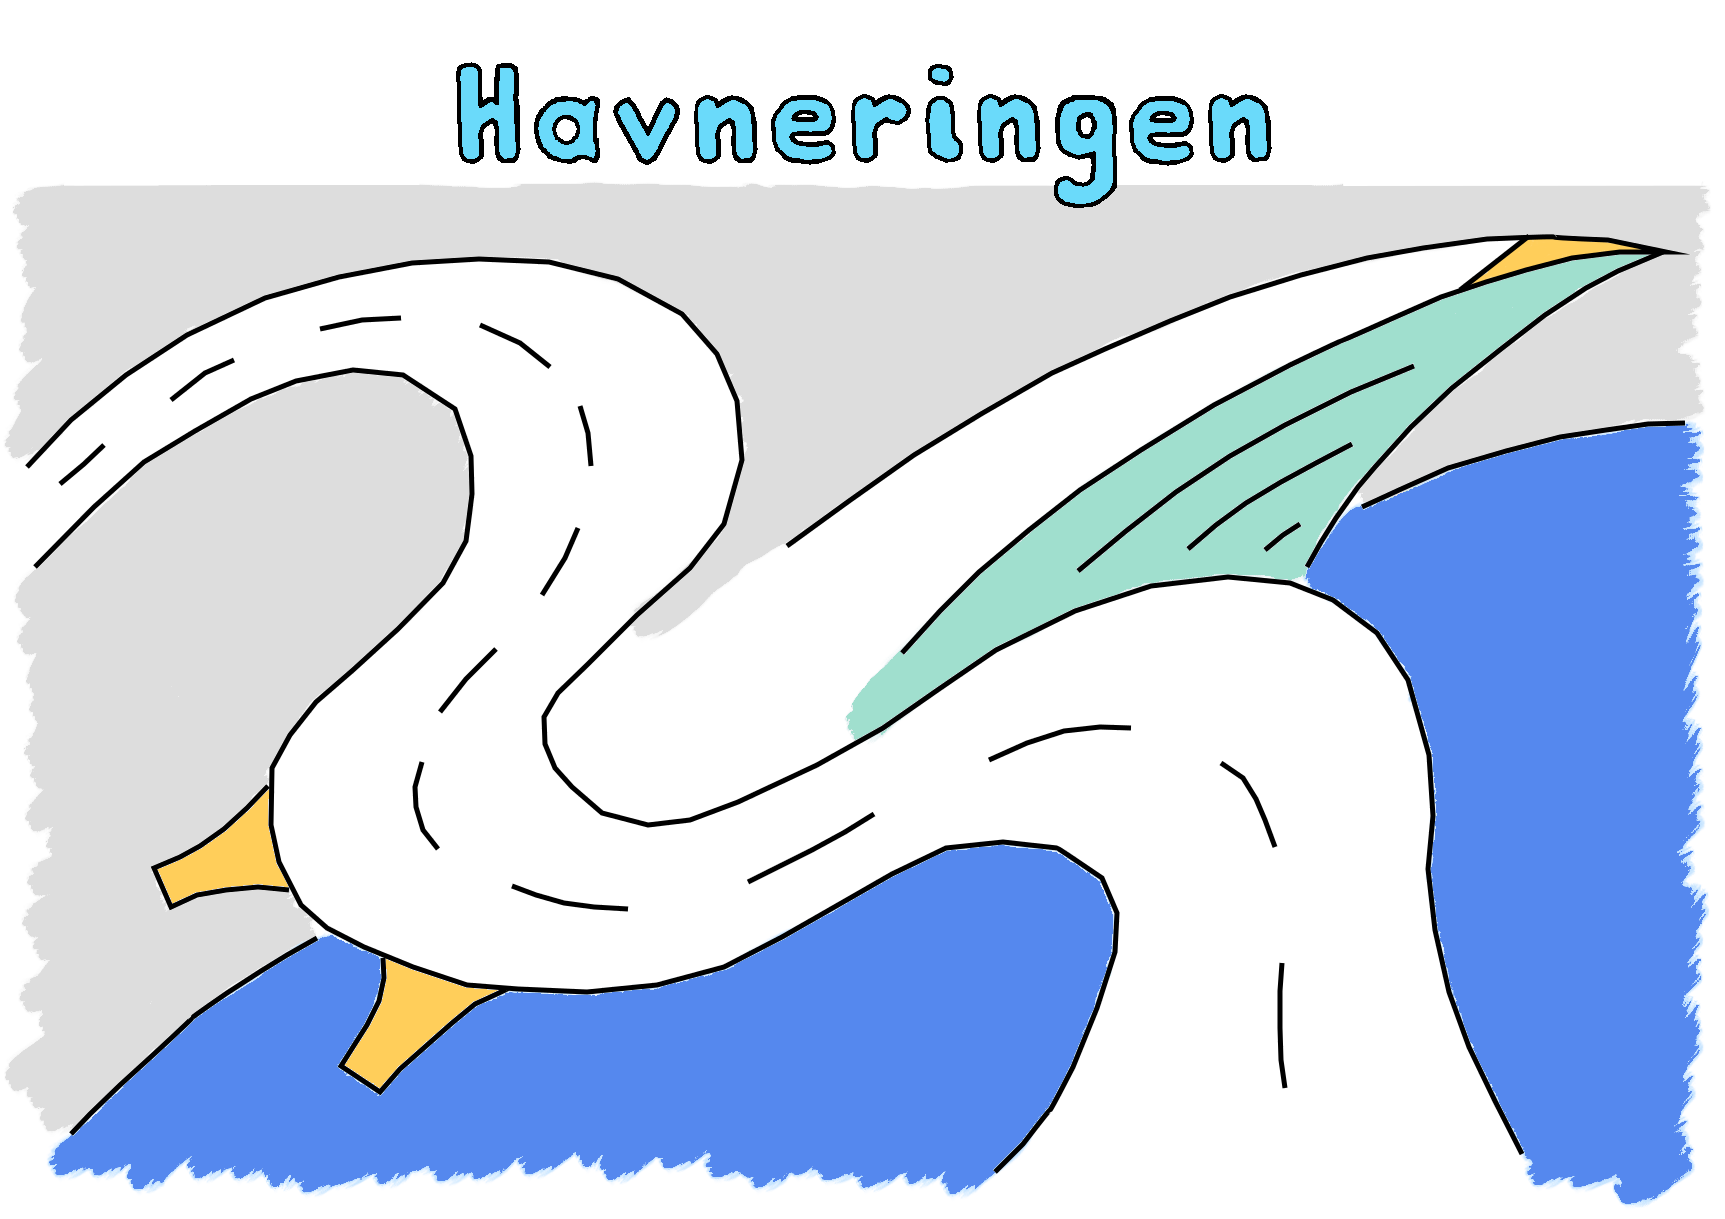 Motif for the Havneringen cycle tour Copenhagen